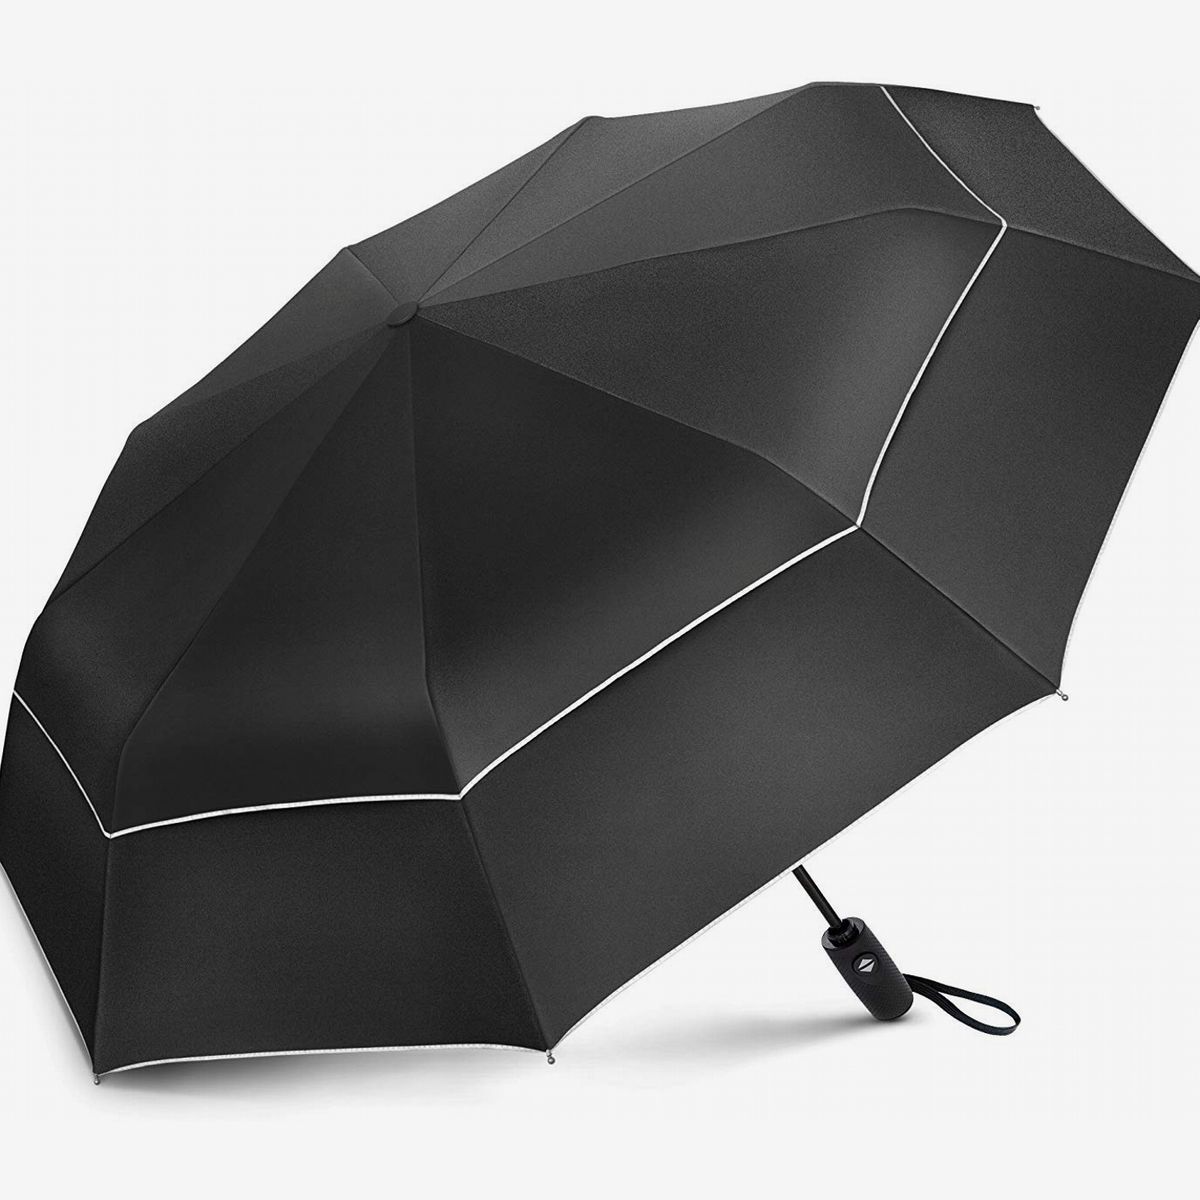 It Was All A Dream Automatic Umbrella Auto Open Close Folding Windproof Foldable For Men Women Kids